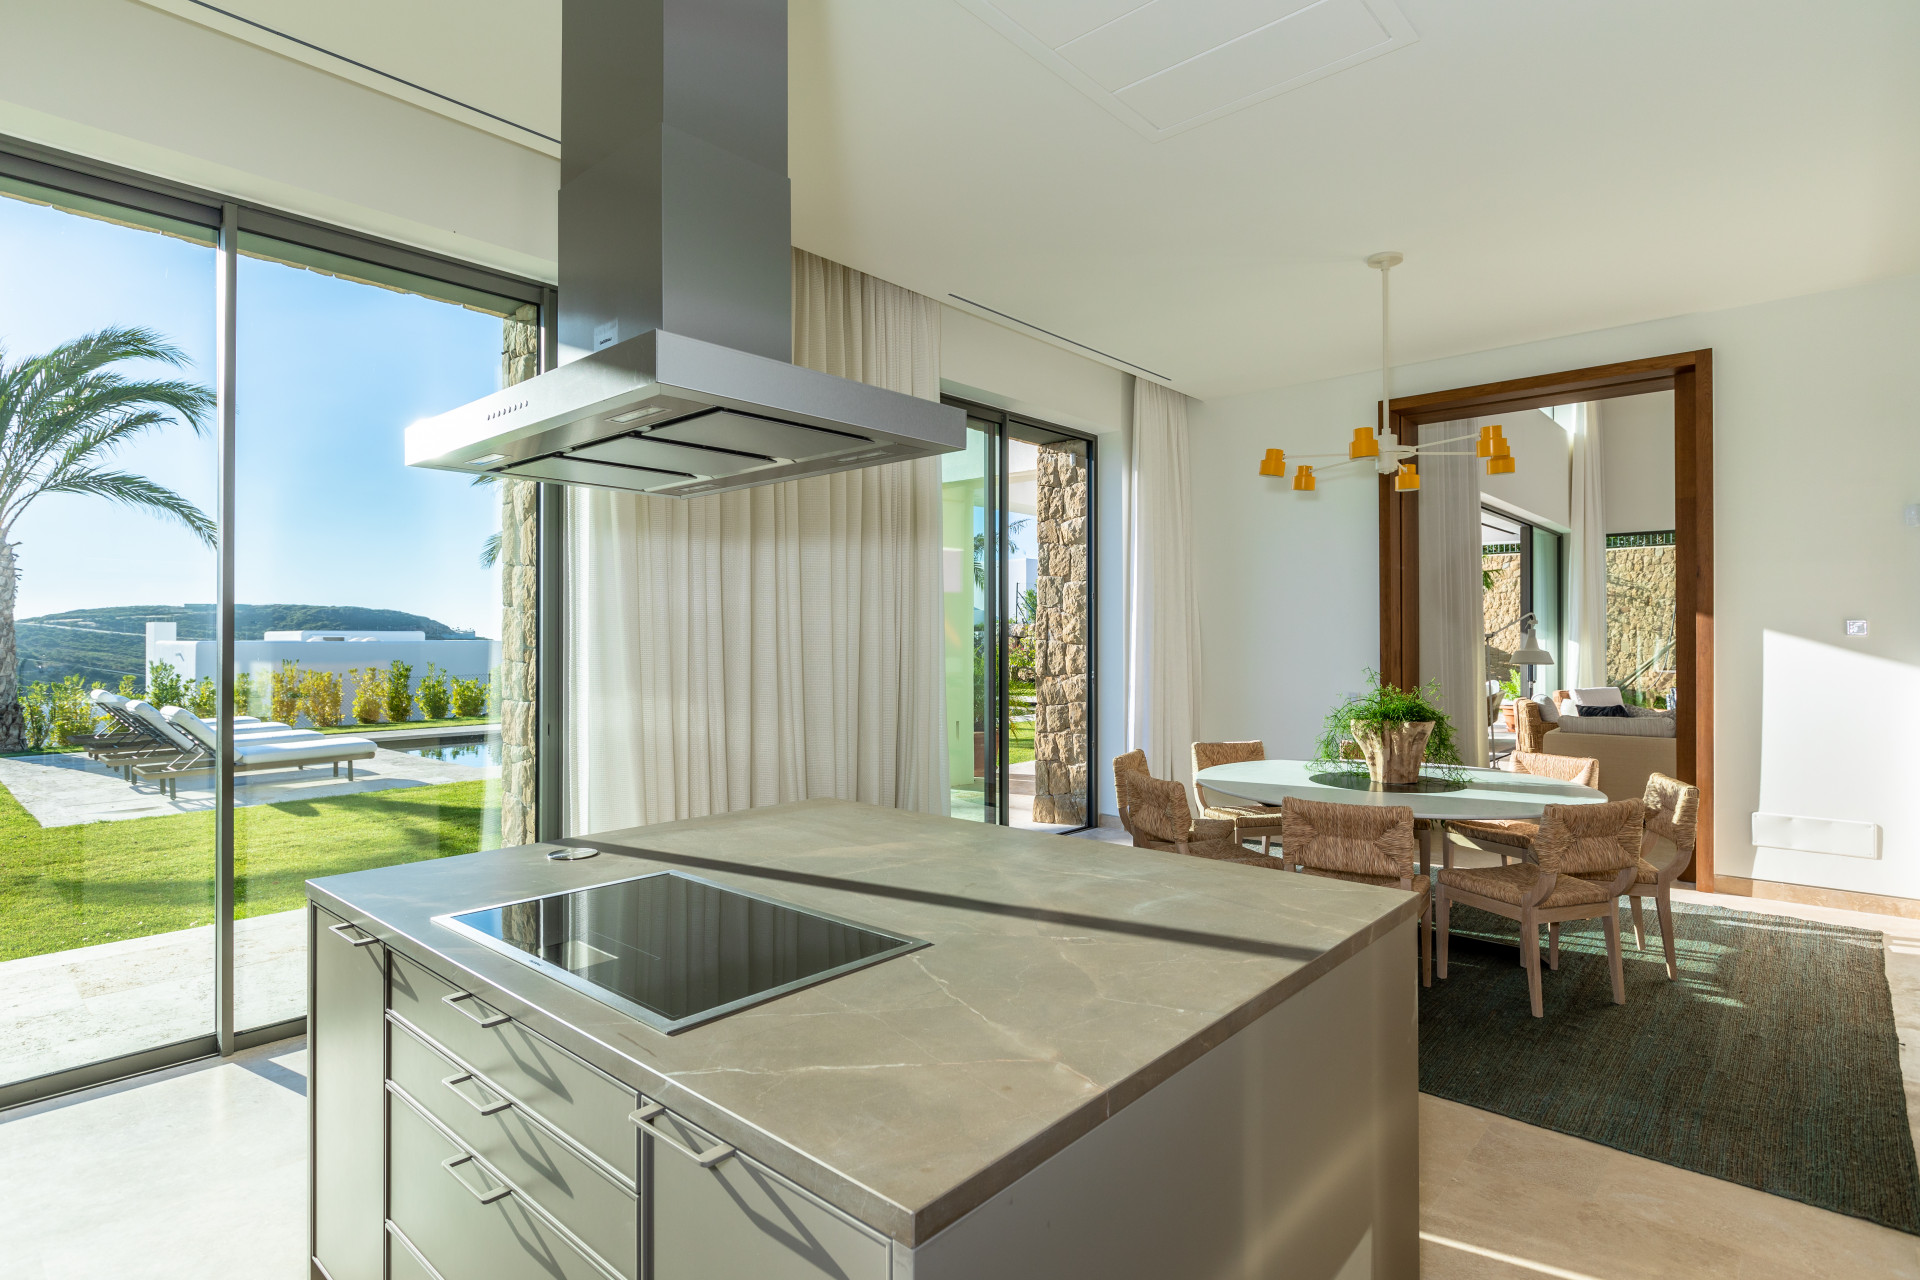 Luxury villas in a small complex within the Finca Cortesin Resort in Casares